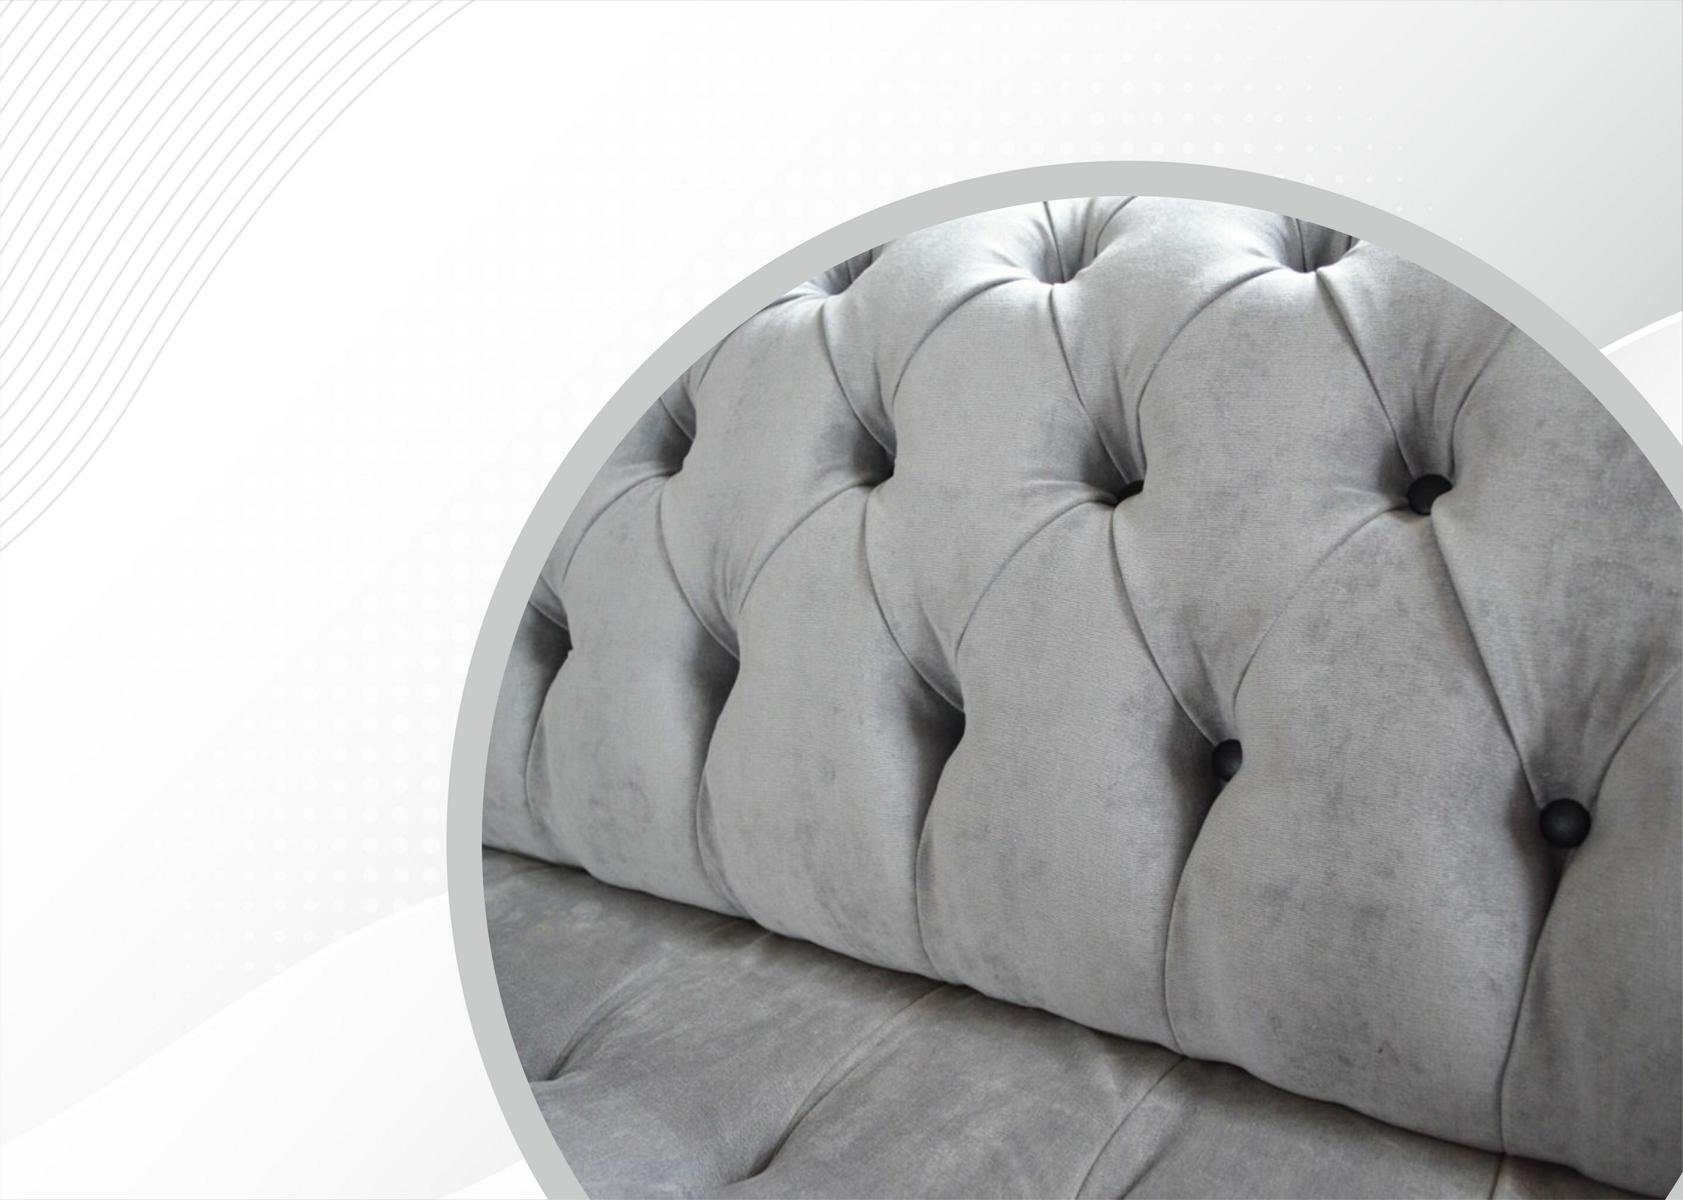 Couch cm Sitzer Sofa 3 Design 3-Sitzer, JVmoebel 225 Sofa Chesterfield